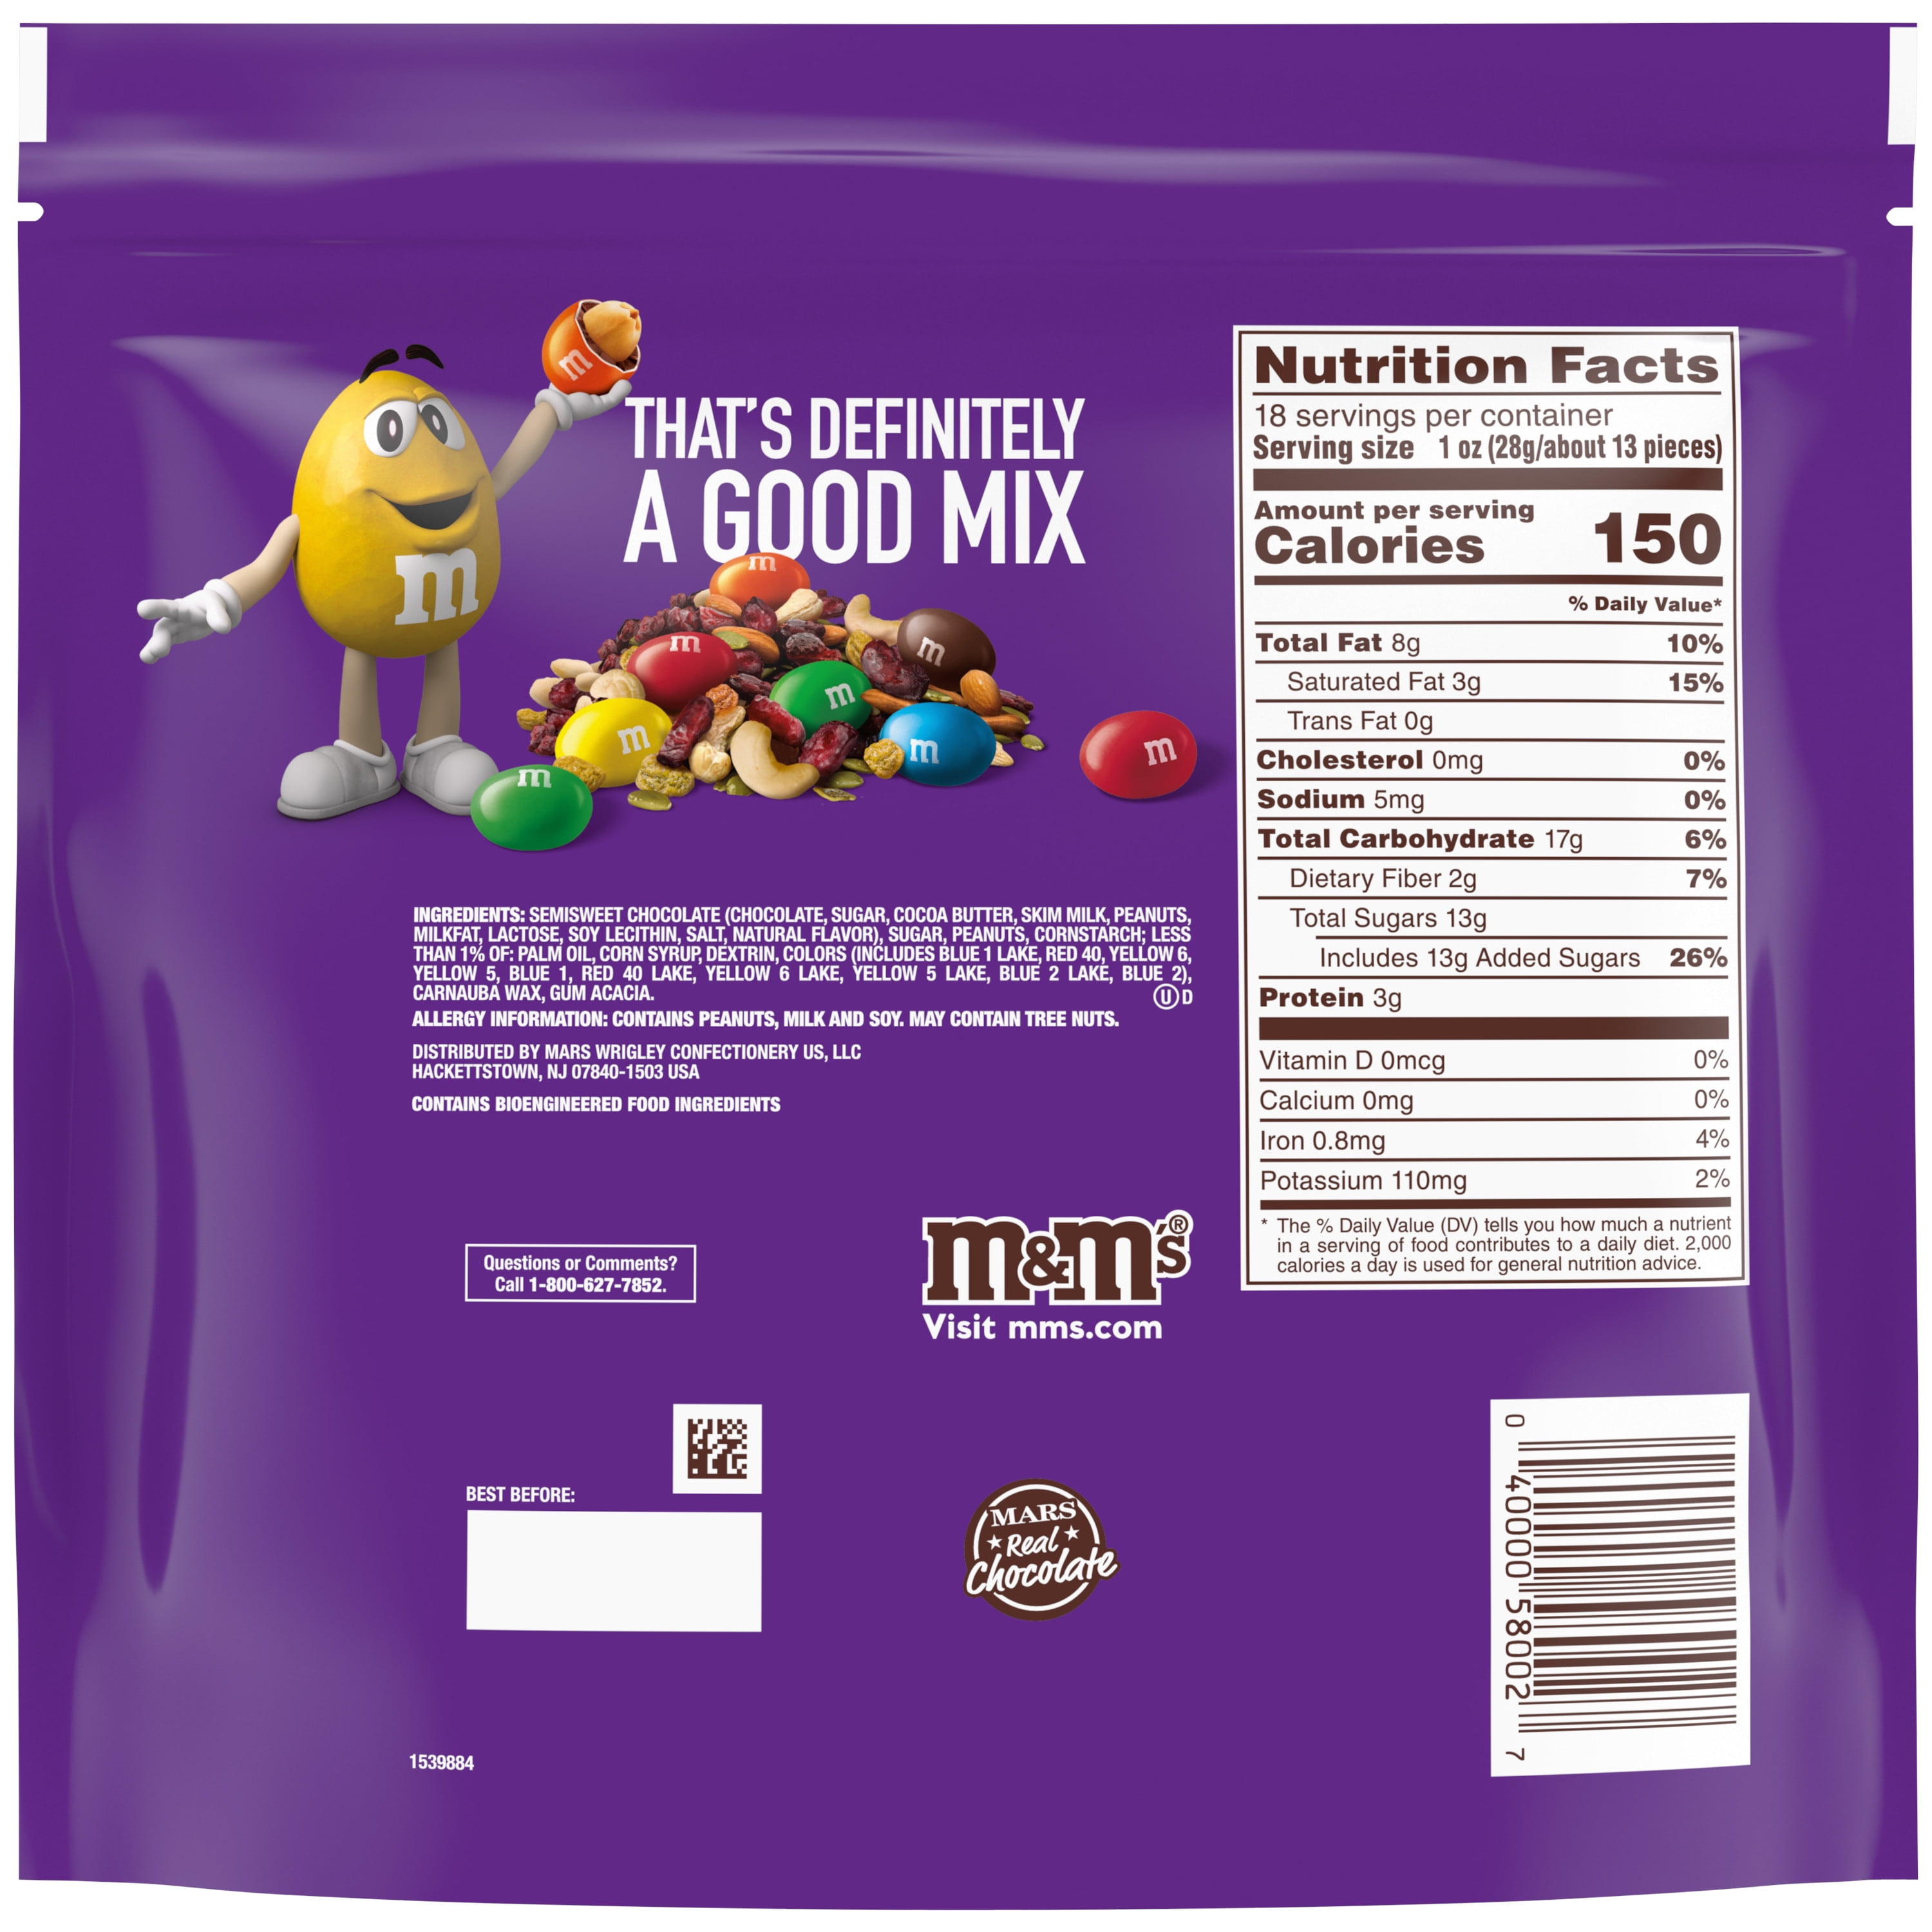 M&M'S Peanut Milk Chocolate Candy Family Size Resealable Bulk Bag, 18.08 oz  - Baker's